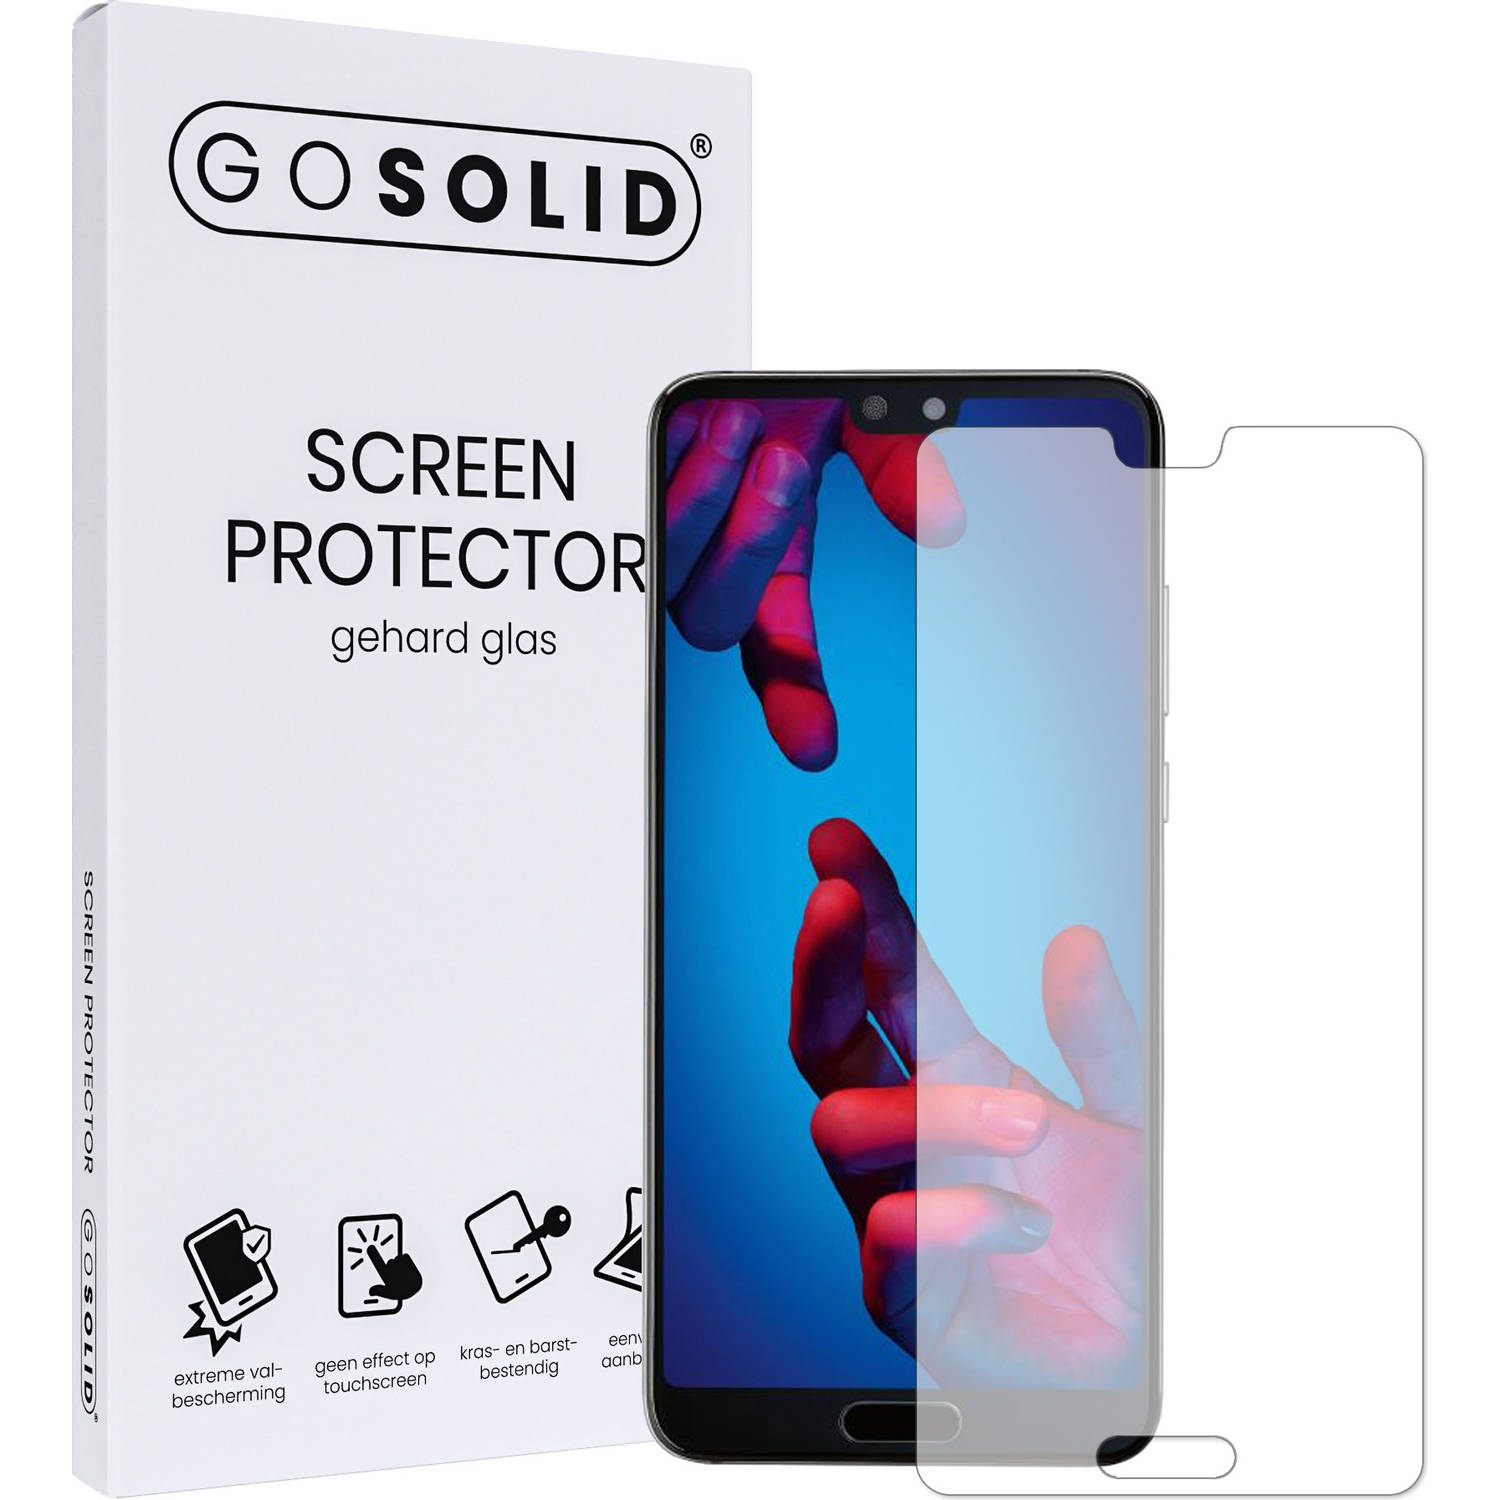 GO SOLID! Screenprotector voor Huawei P20 Pro gehard glas